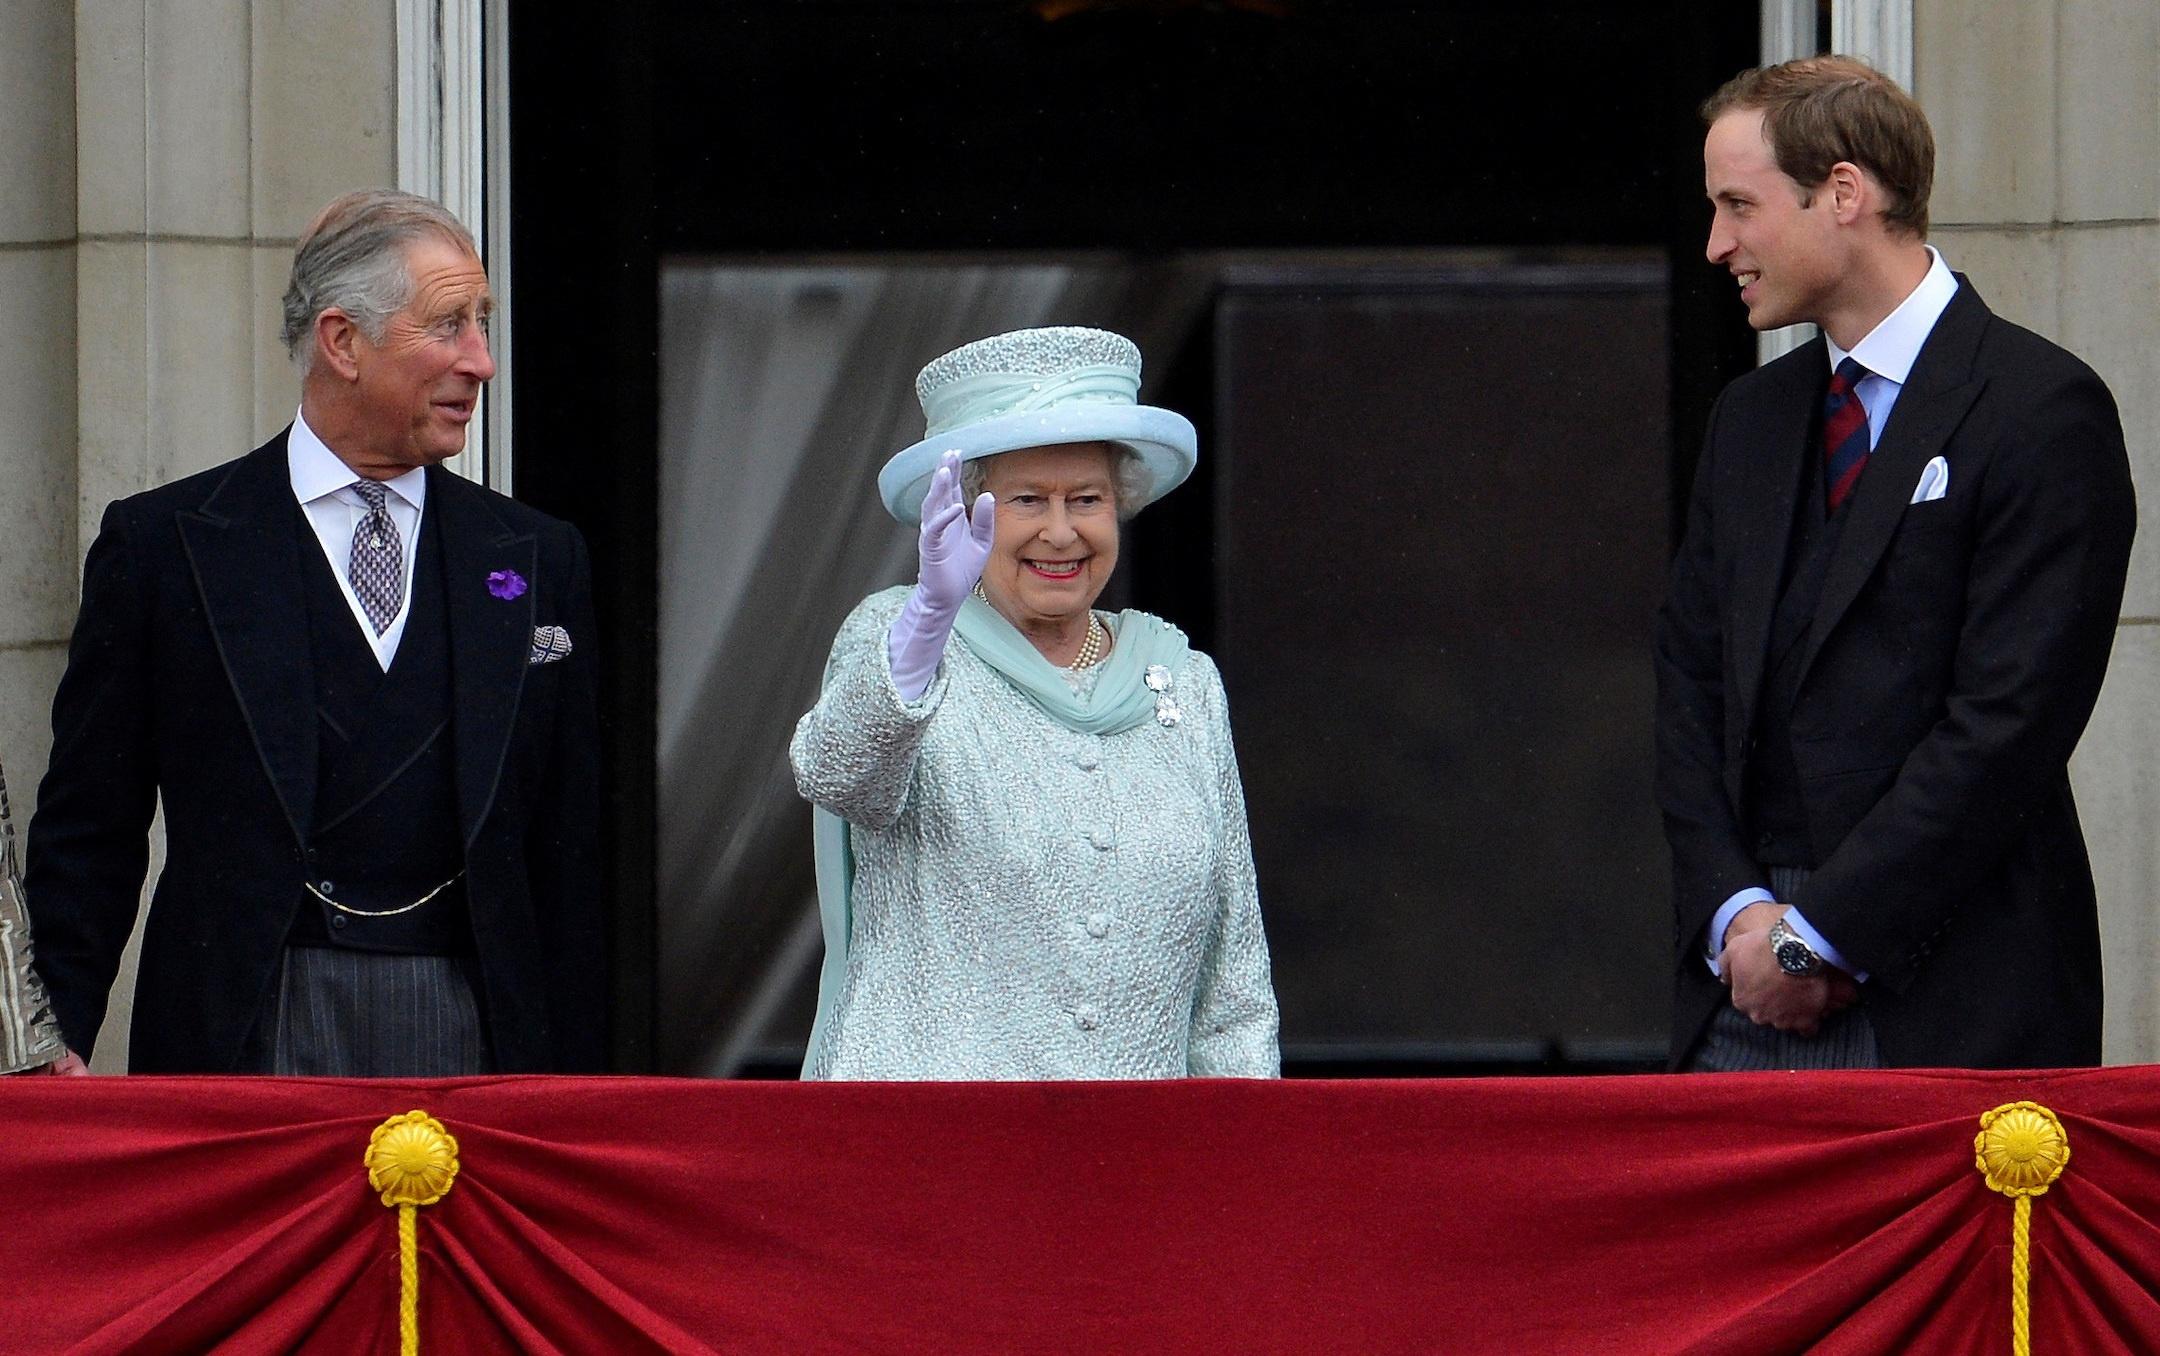 Crowds gather in UK to mourn Queen Elizabeth II